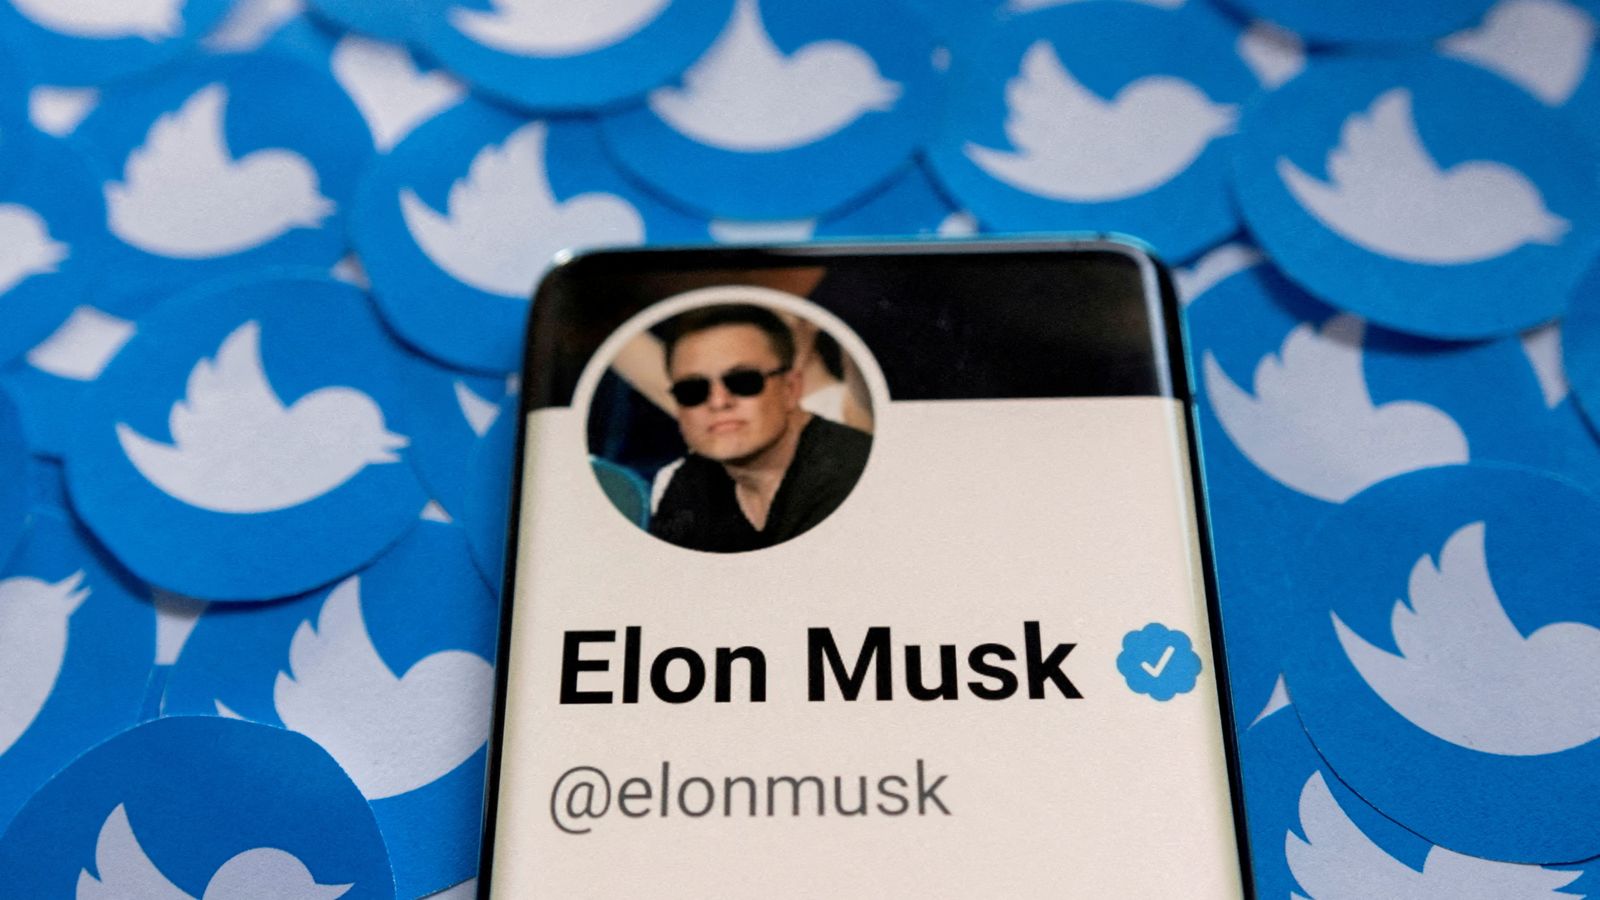 Super app or Wild West? The future of Twitter under Elon Musk